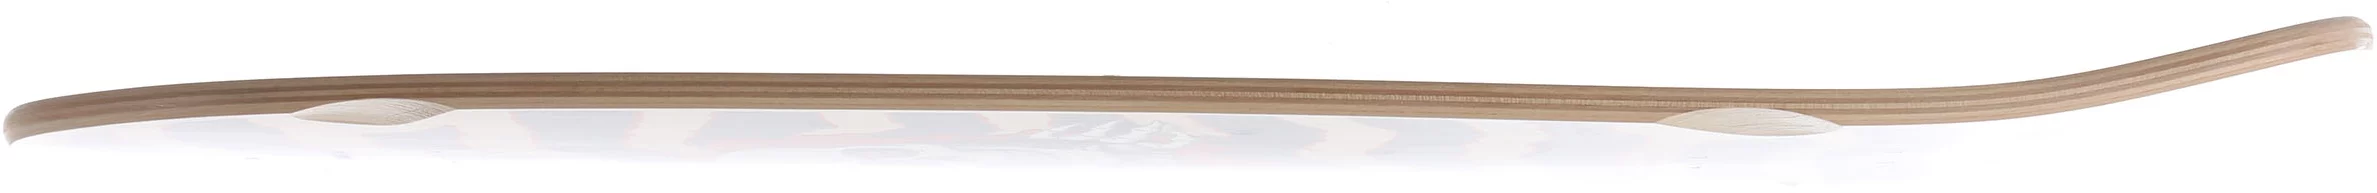 Powell Peralta OG Ripper Skateboard Deck Orange - 10 x 30 - Powell-Peralta®